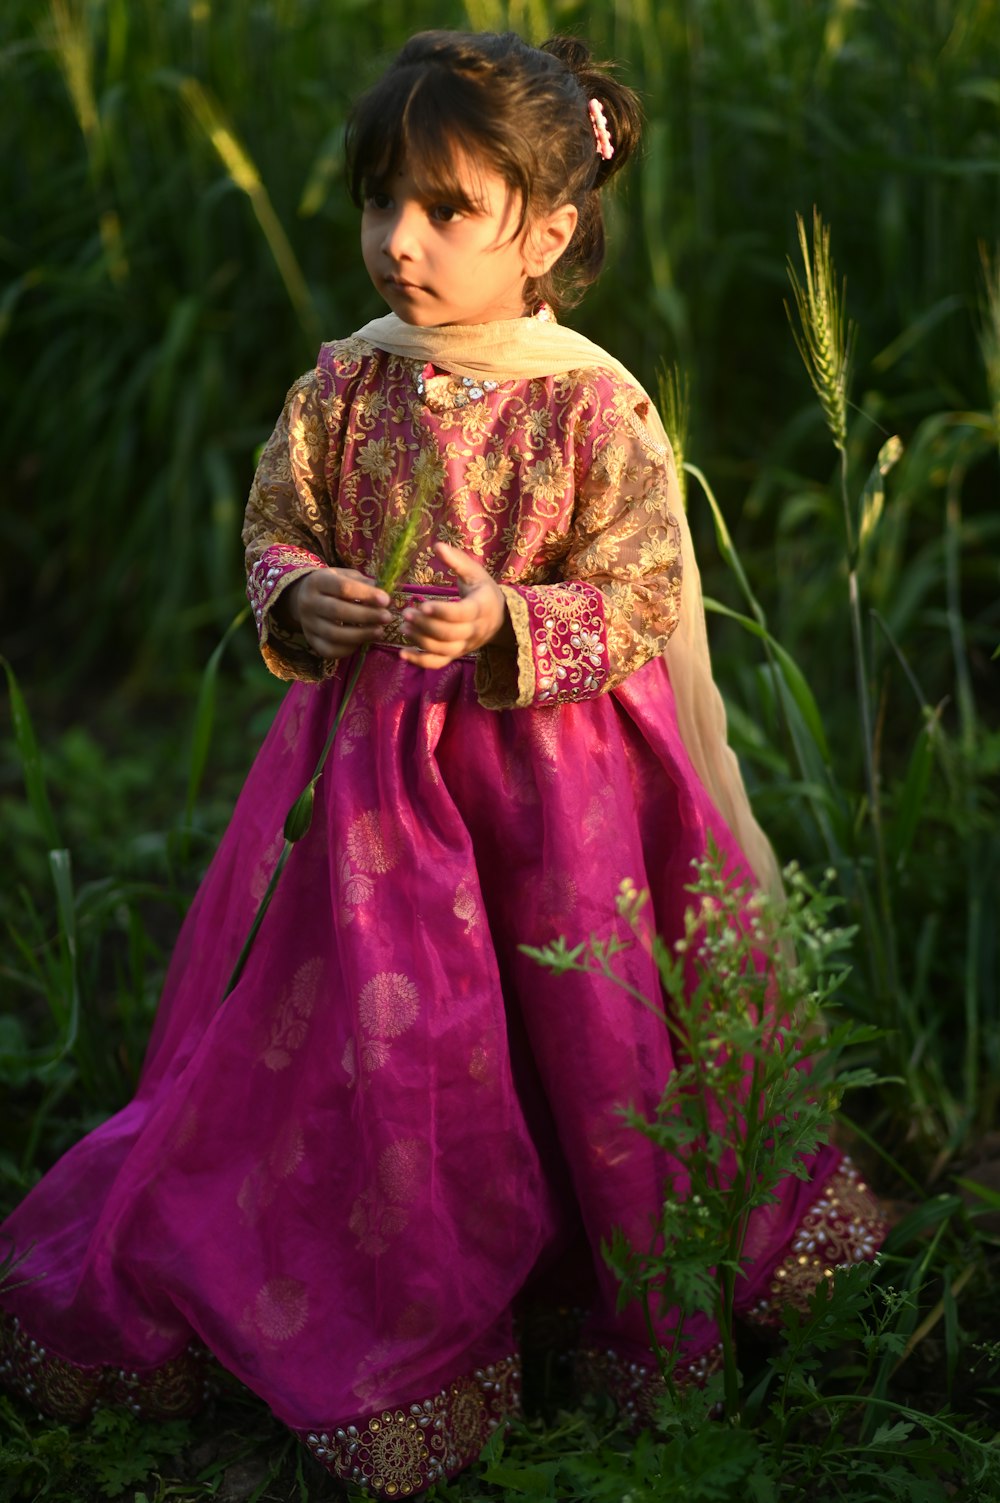 a little girl in a pink dress standing in a field